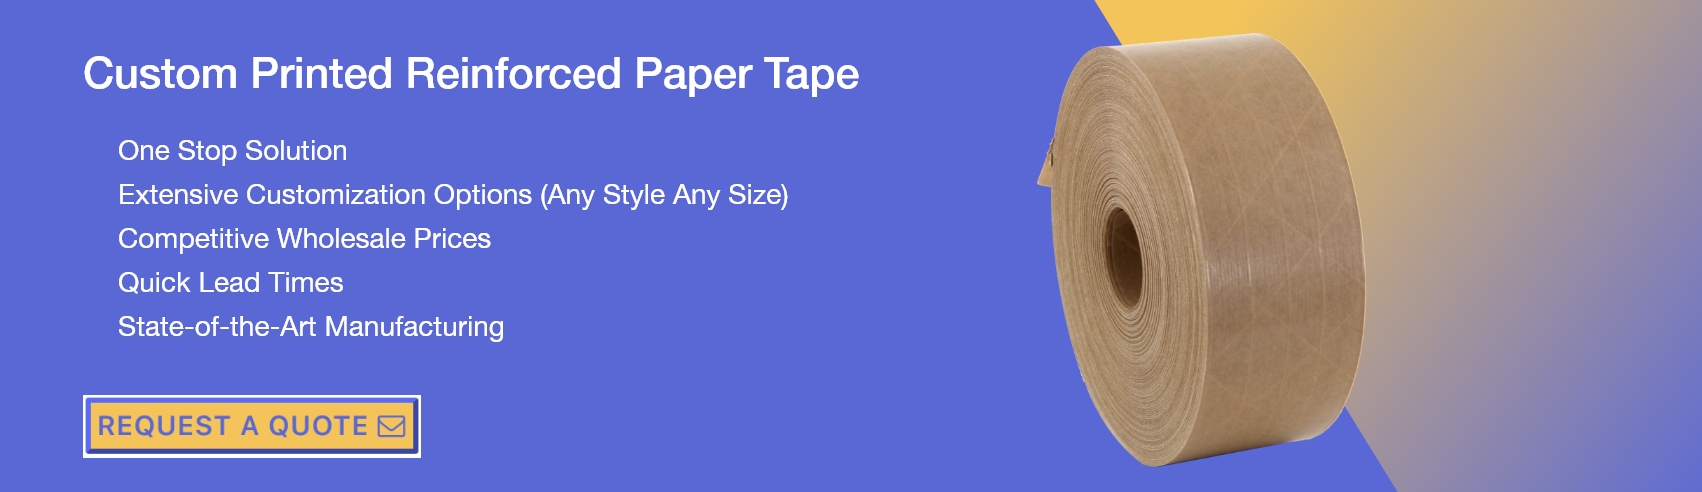 Custom Printed Reinforced Paper Tape